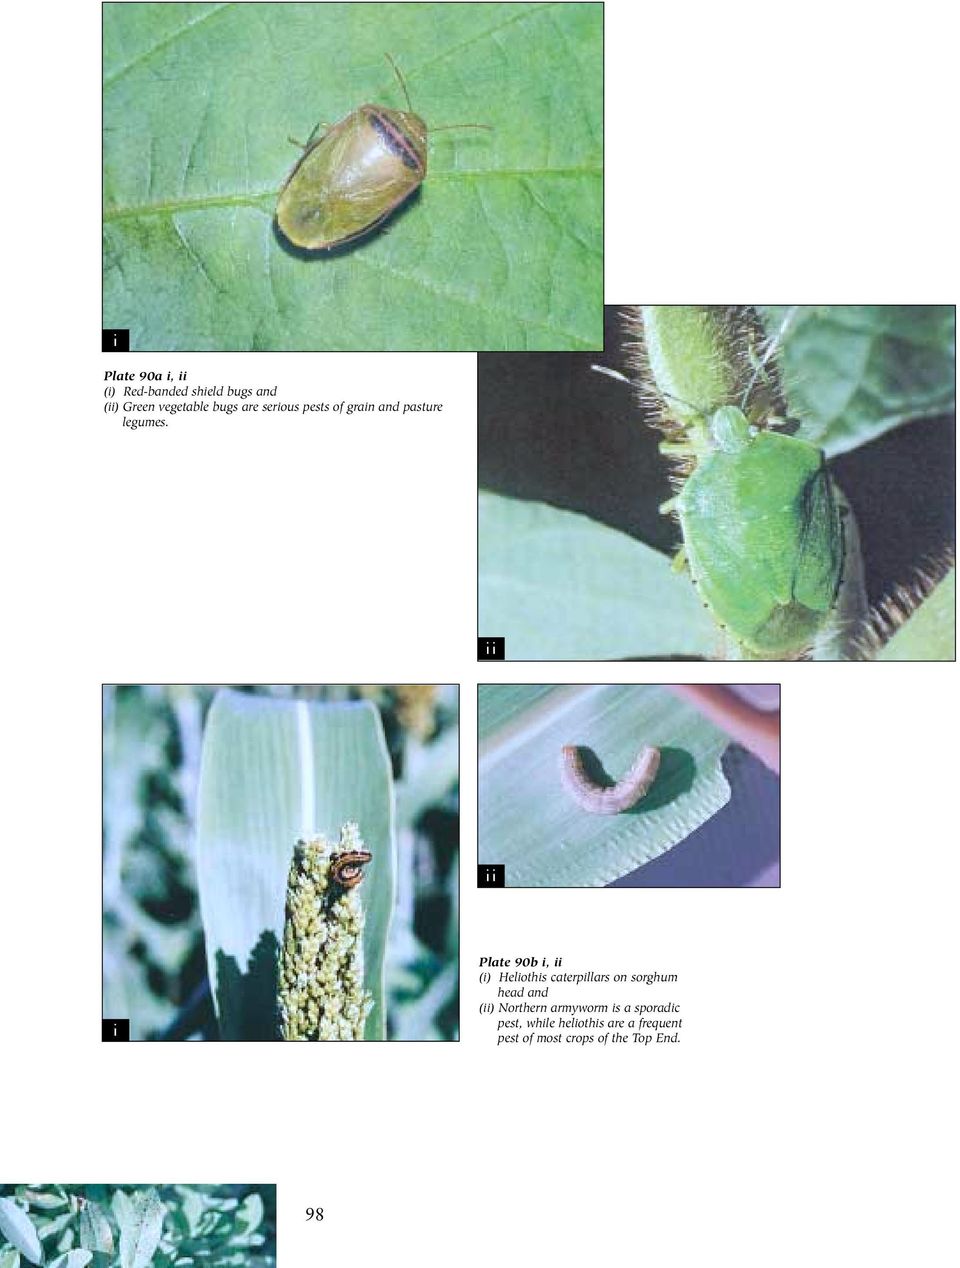 ii ii i Plate 90b i, ii (i) Heliothis caterpillars on sorghum head and (ii)